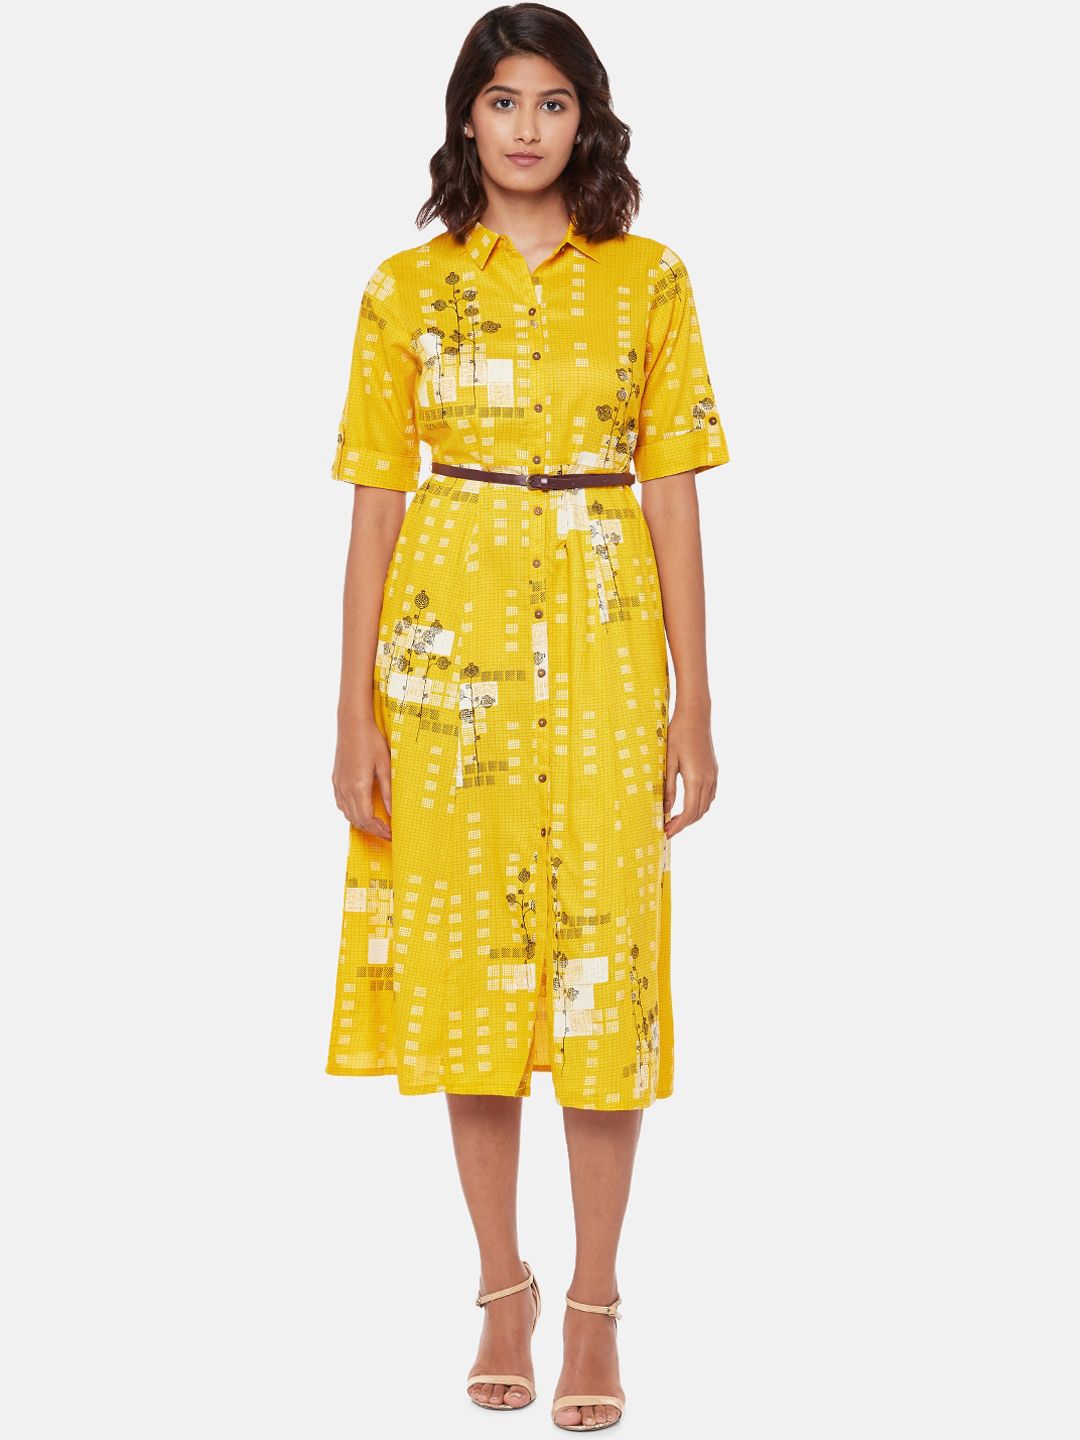 AKKRITI BY PANTALOONS Women Mustard Yellow Printed Shirt Dress Price in India